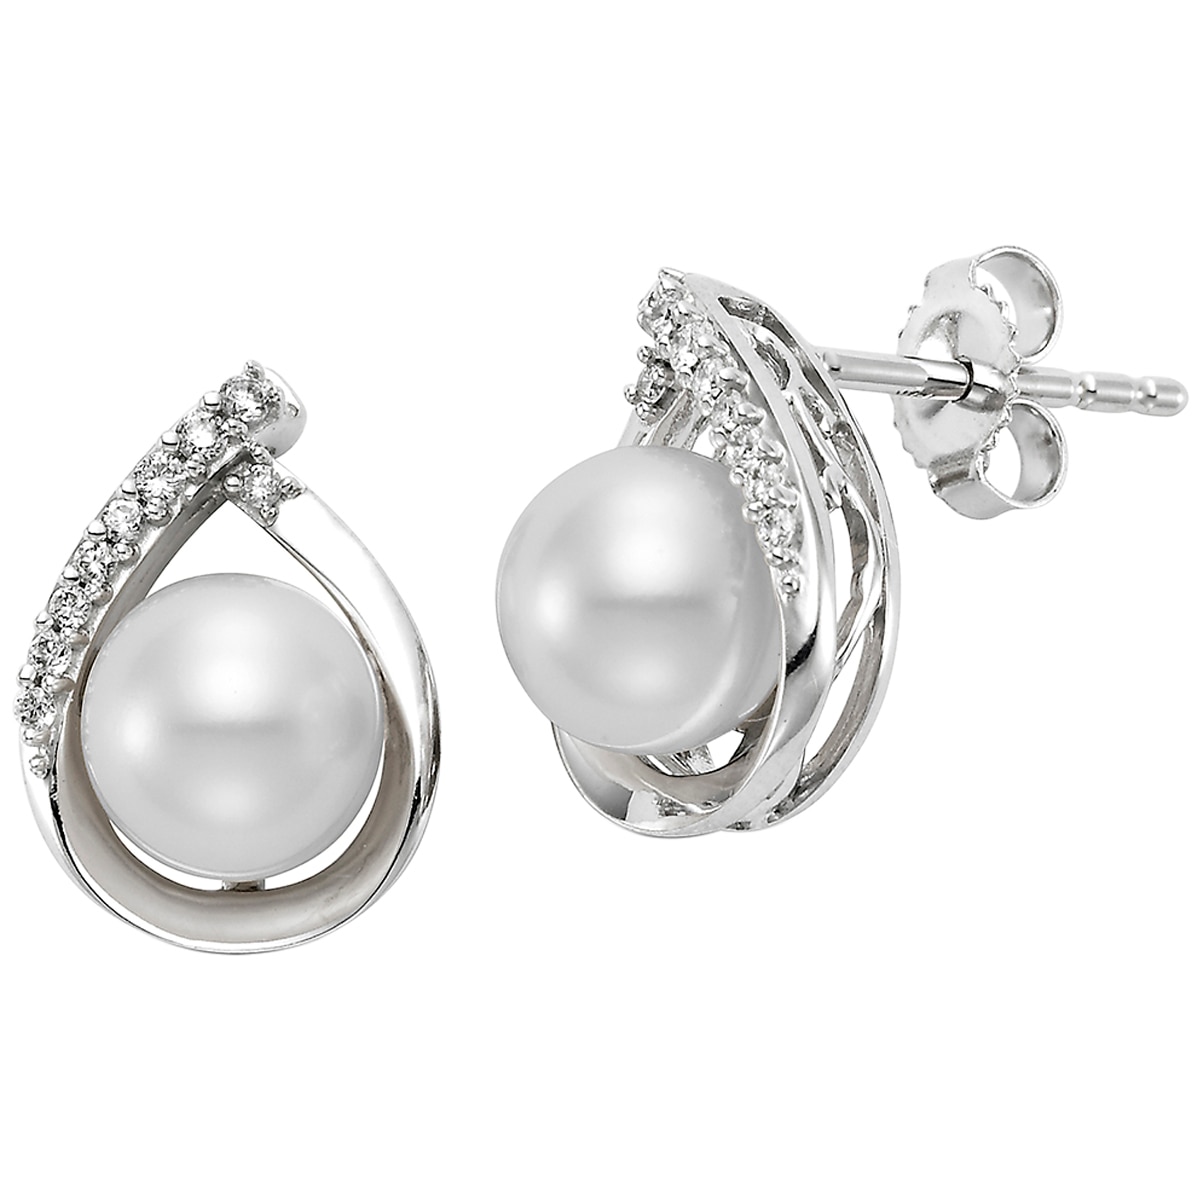 18KT White Gold White Freshwater Pearl and Diamond Earrings